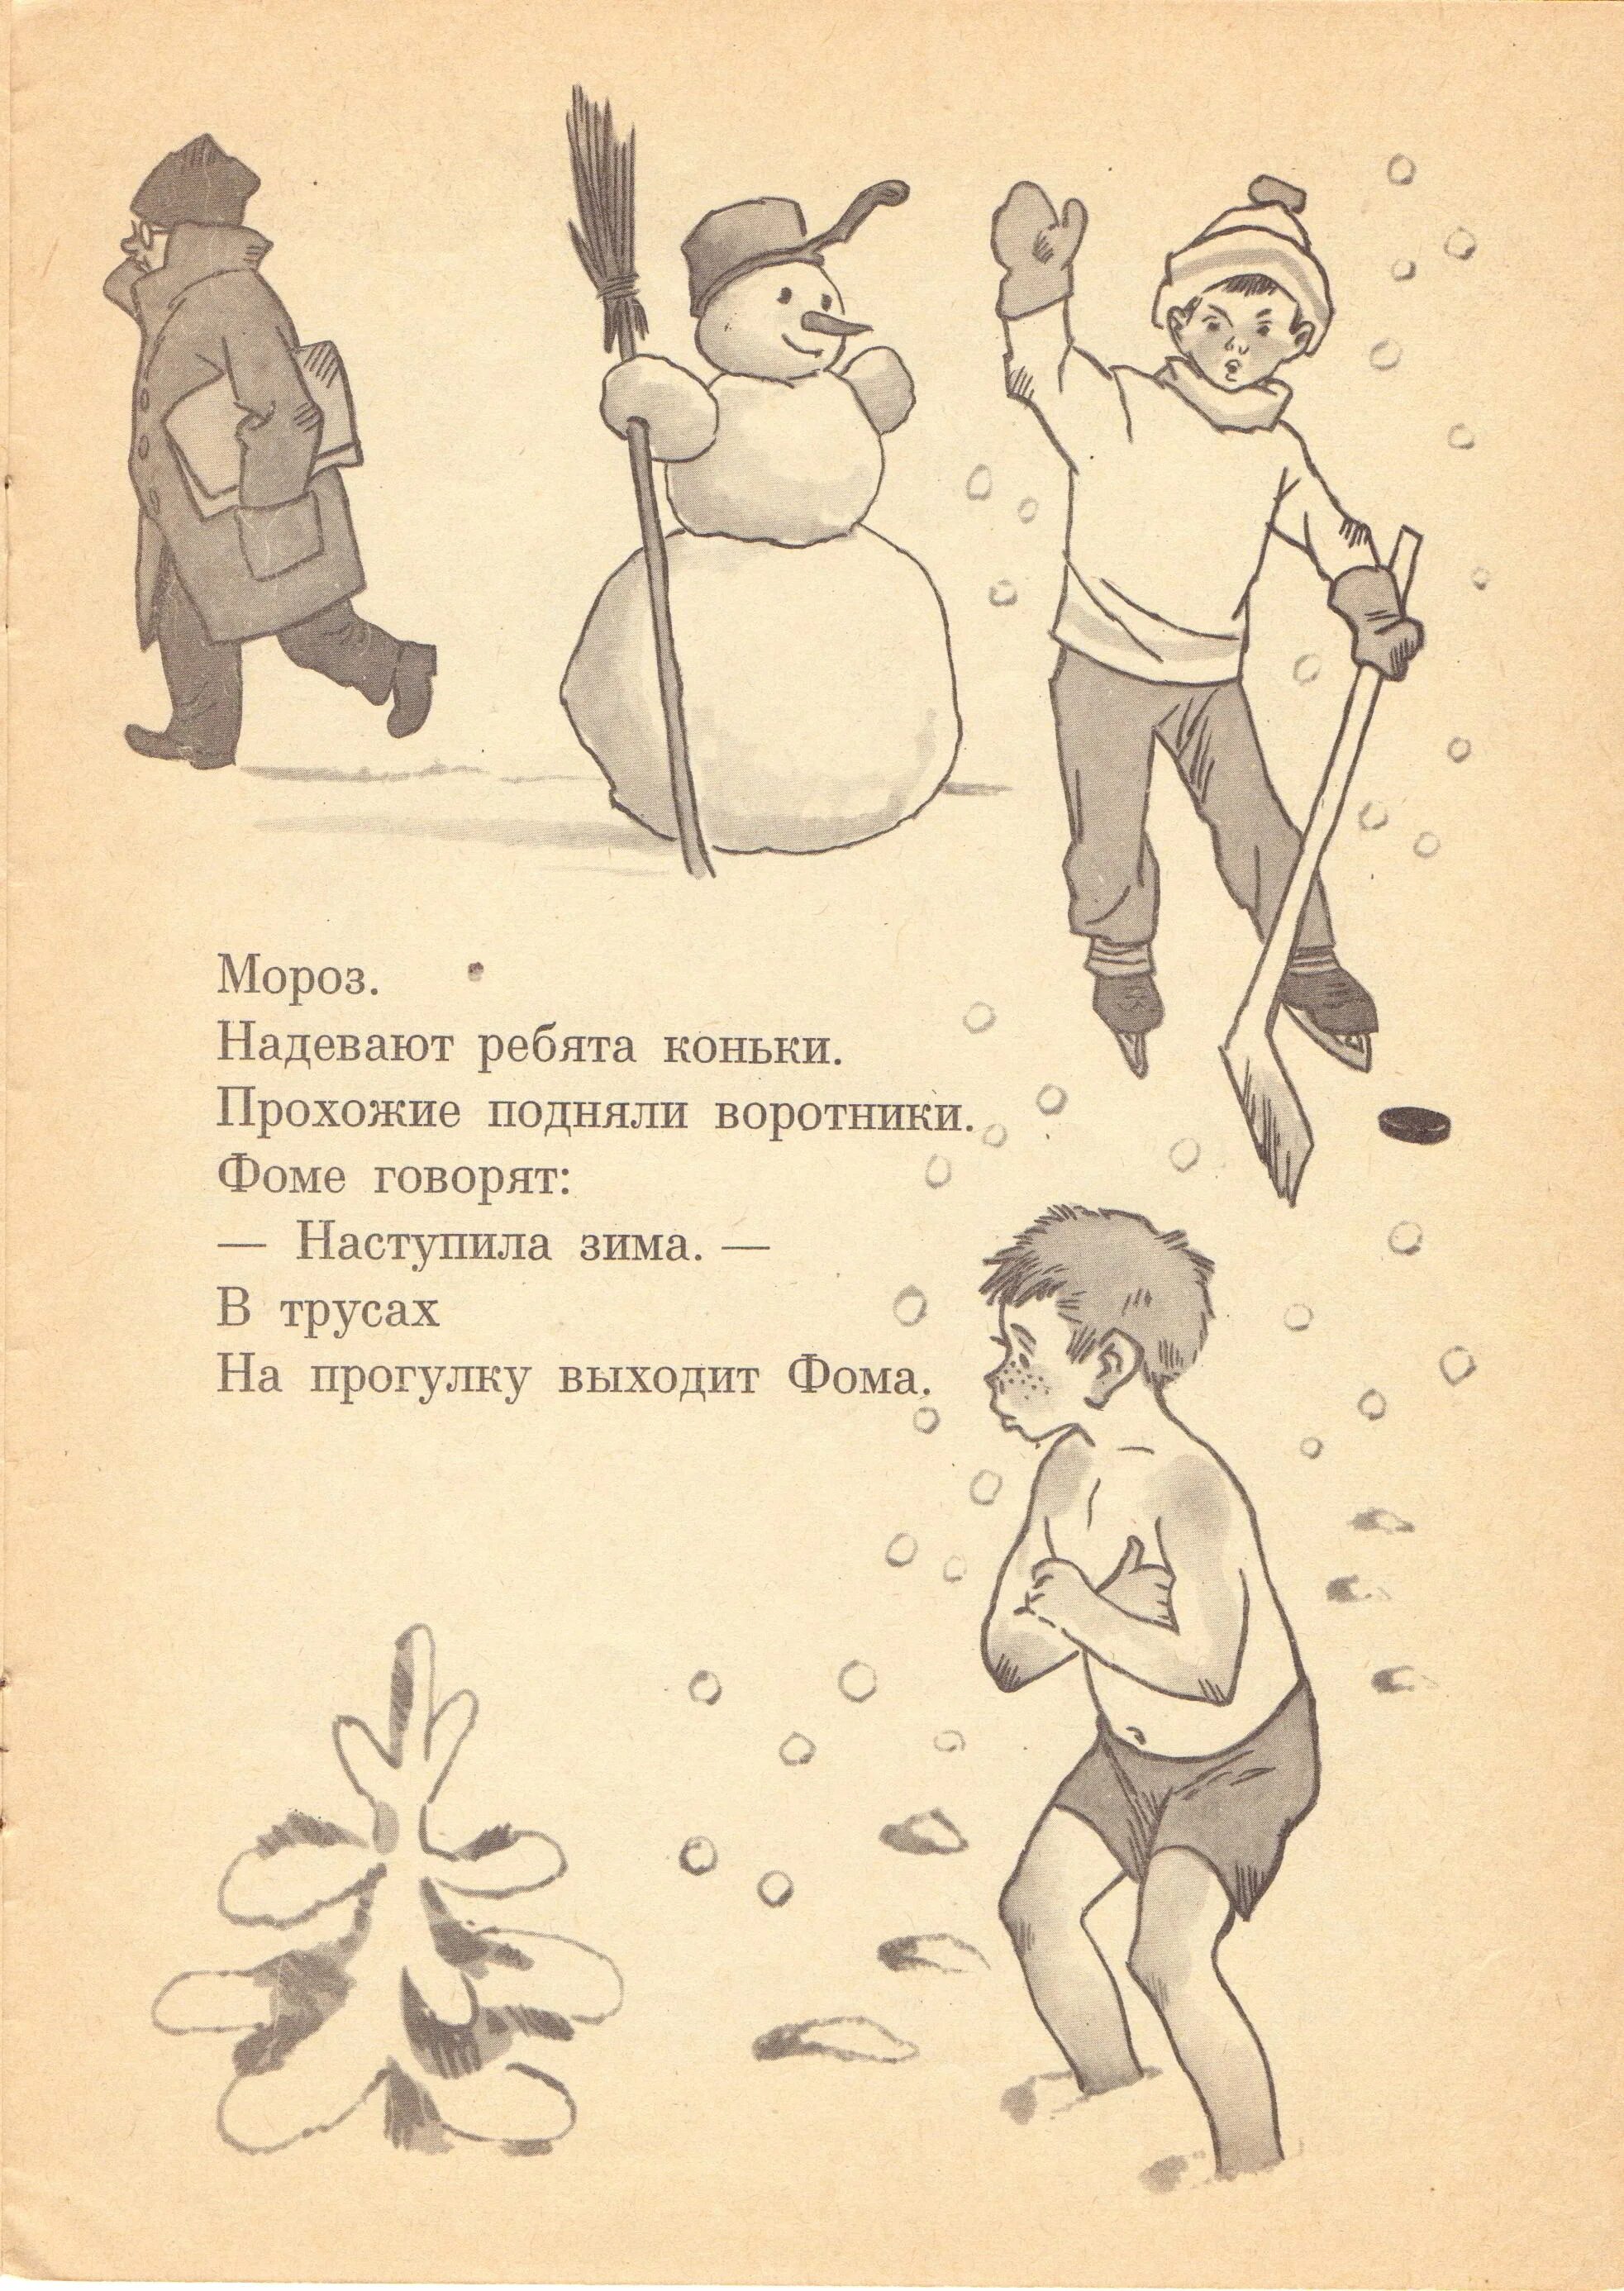 Mimosa Mikhalkov's coloring page